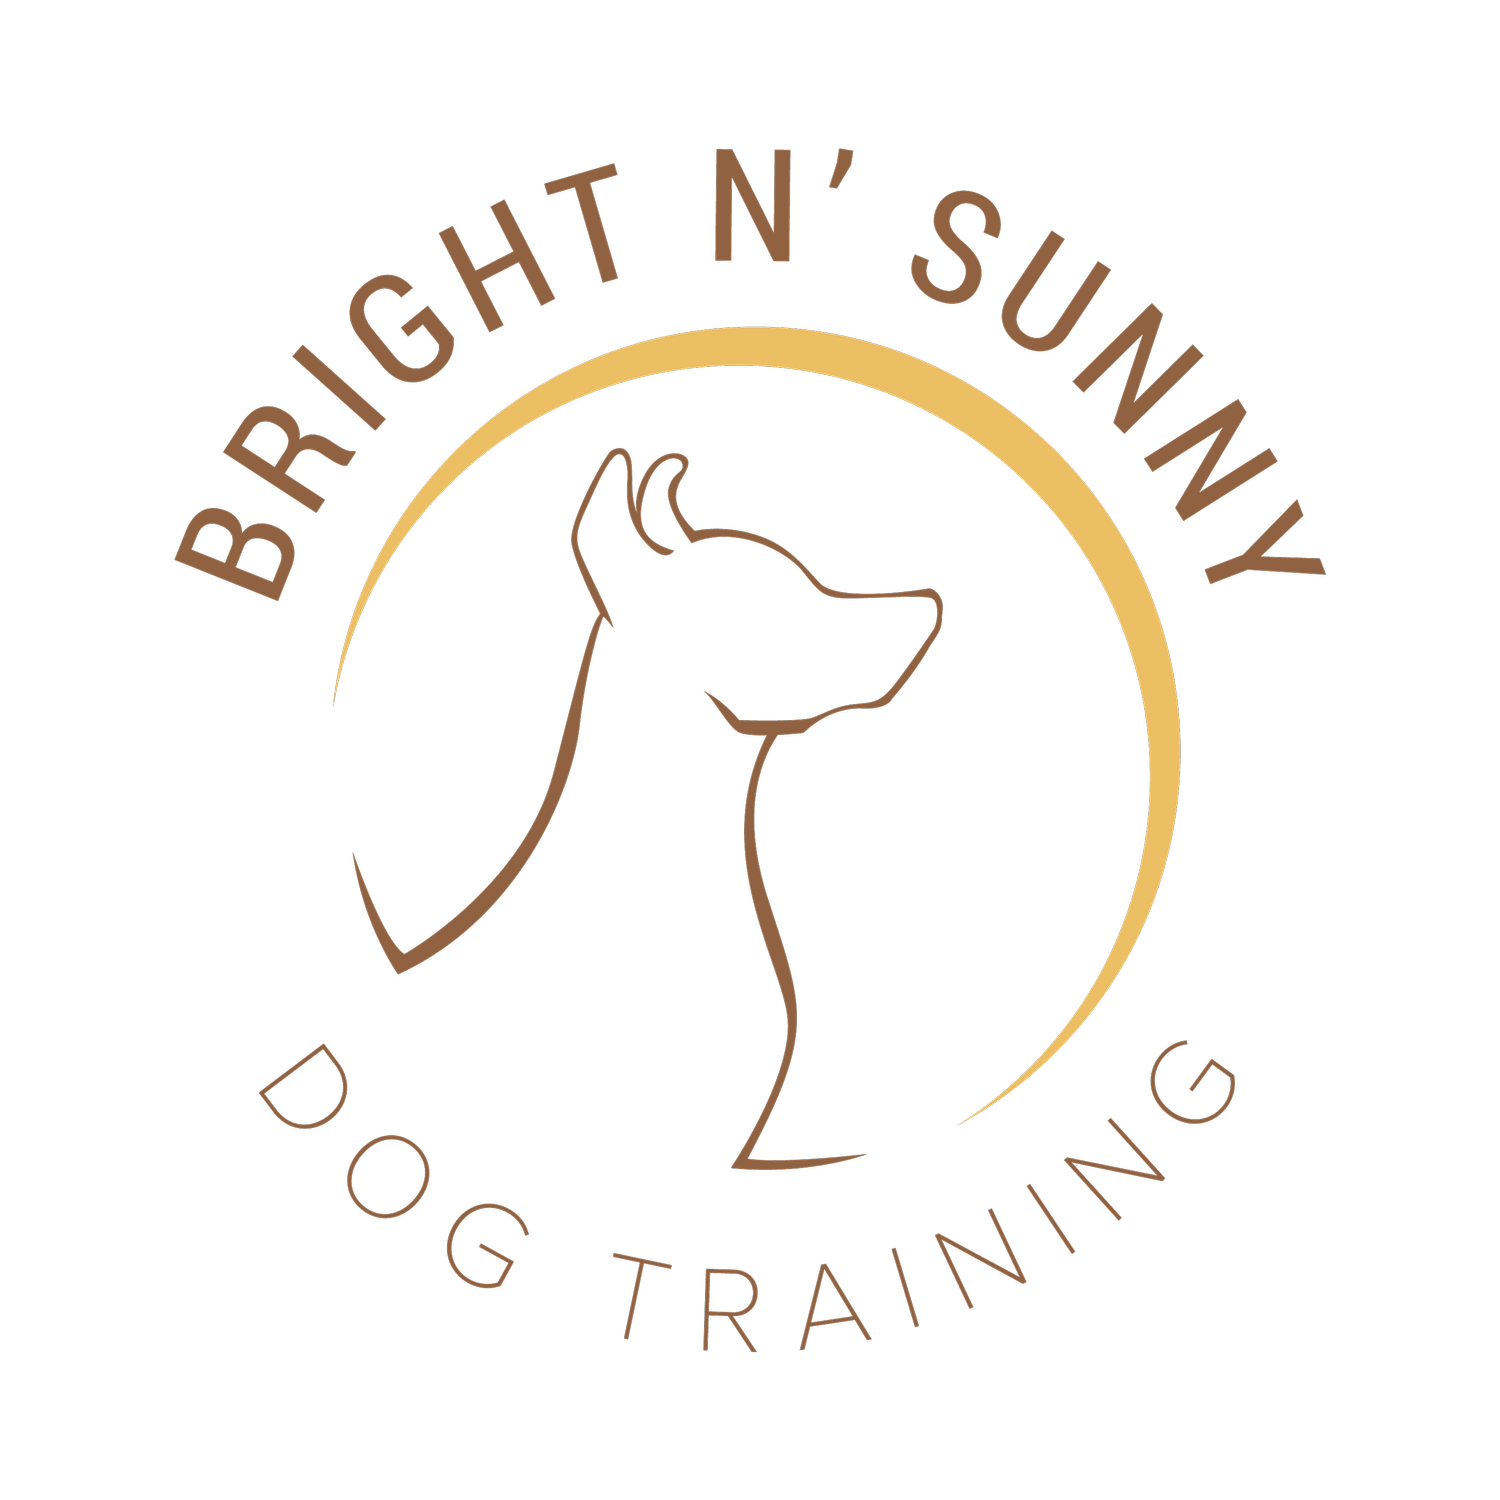 Bright N&#39; Sunny Dog Training